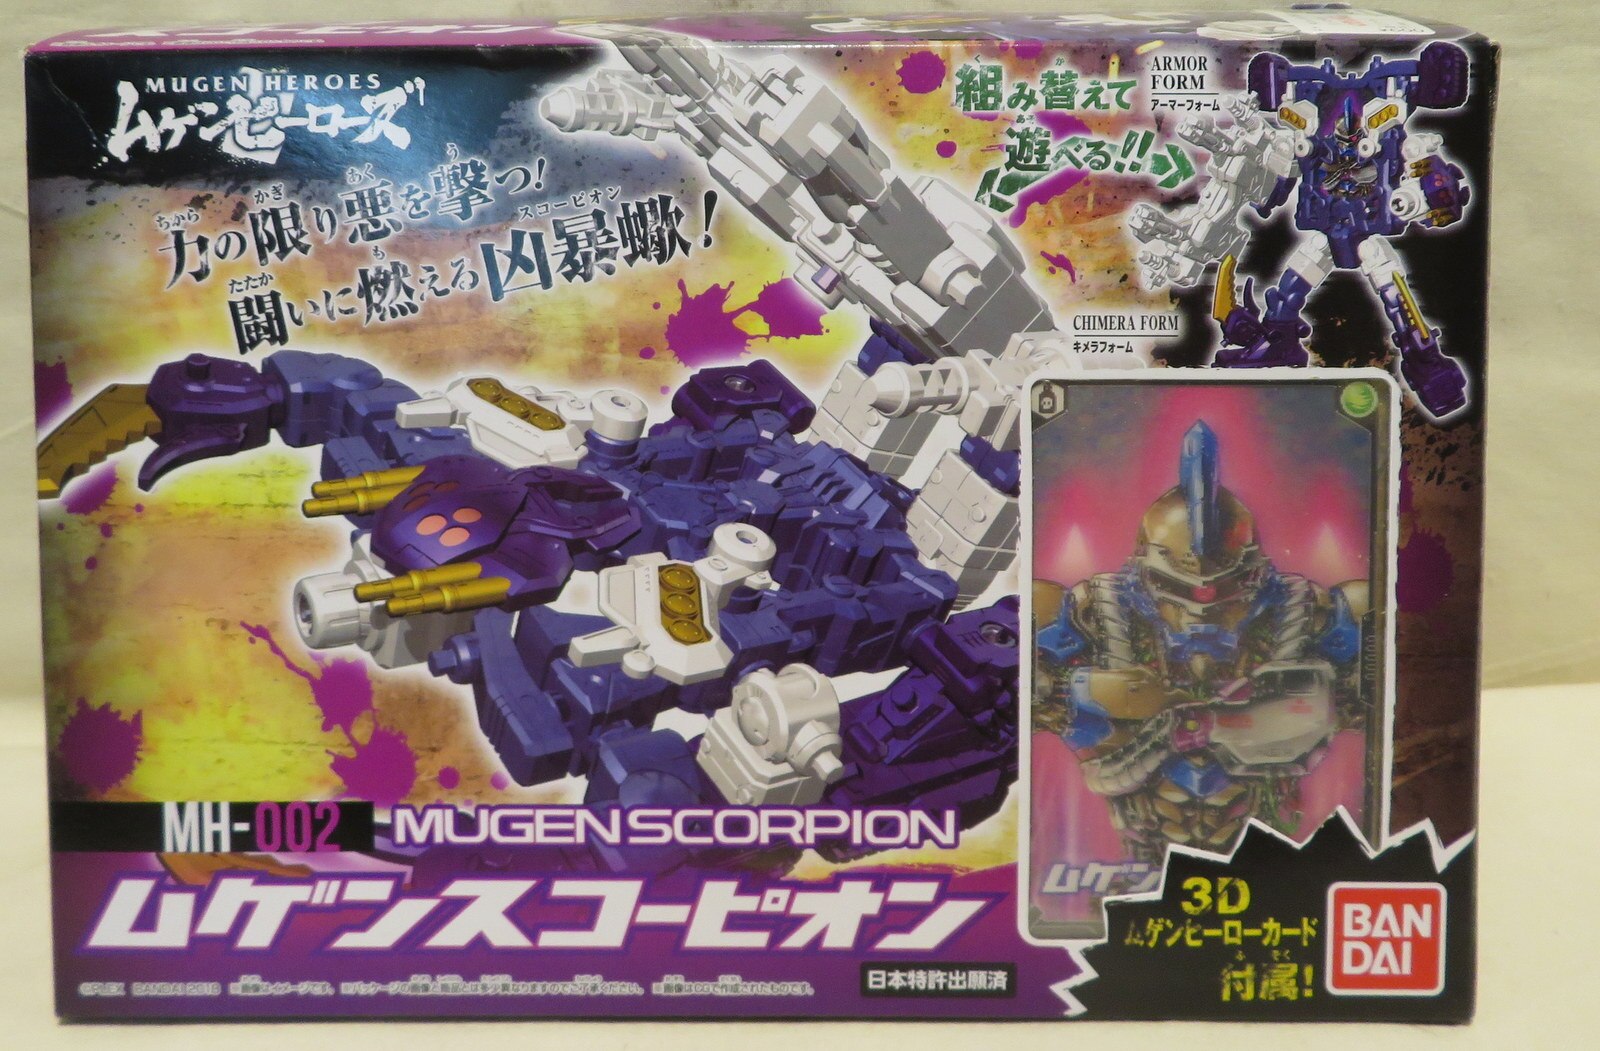 Bandai Mugen Heroes Mugen Scorpion Mh002 Mandarake Online Shop